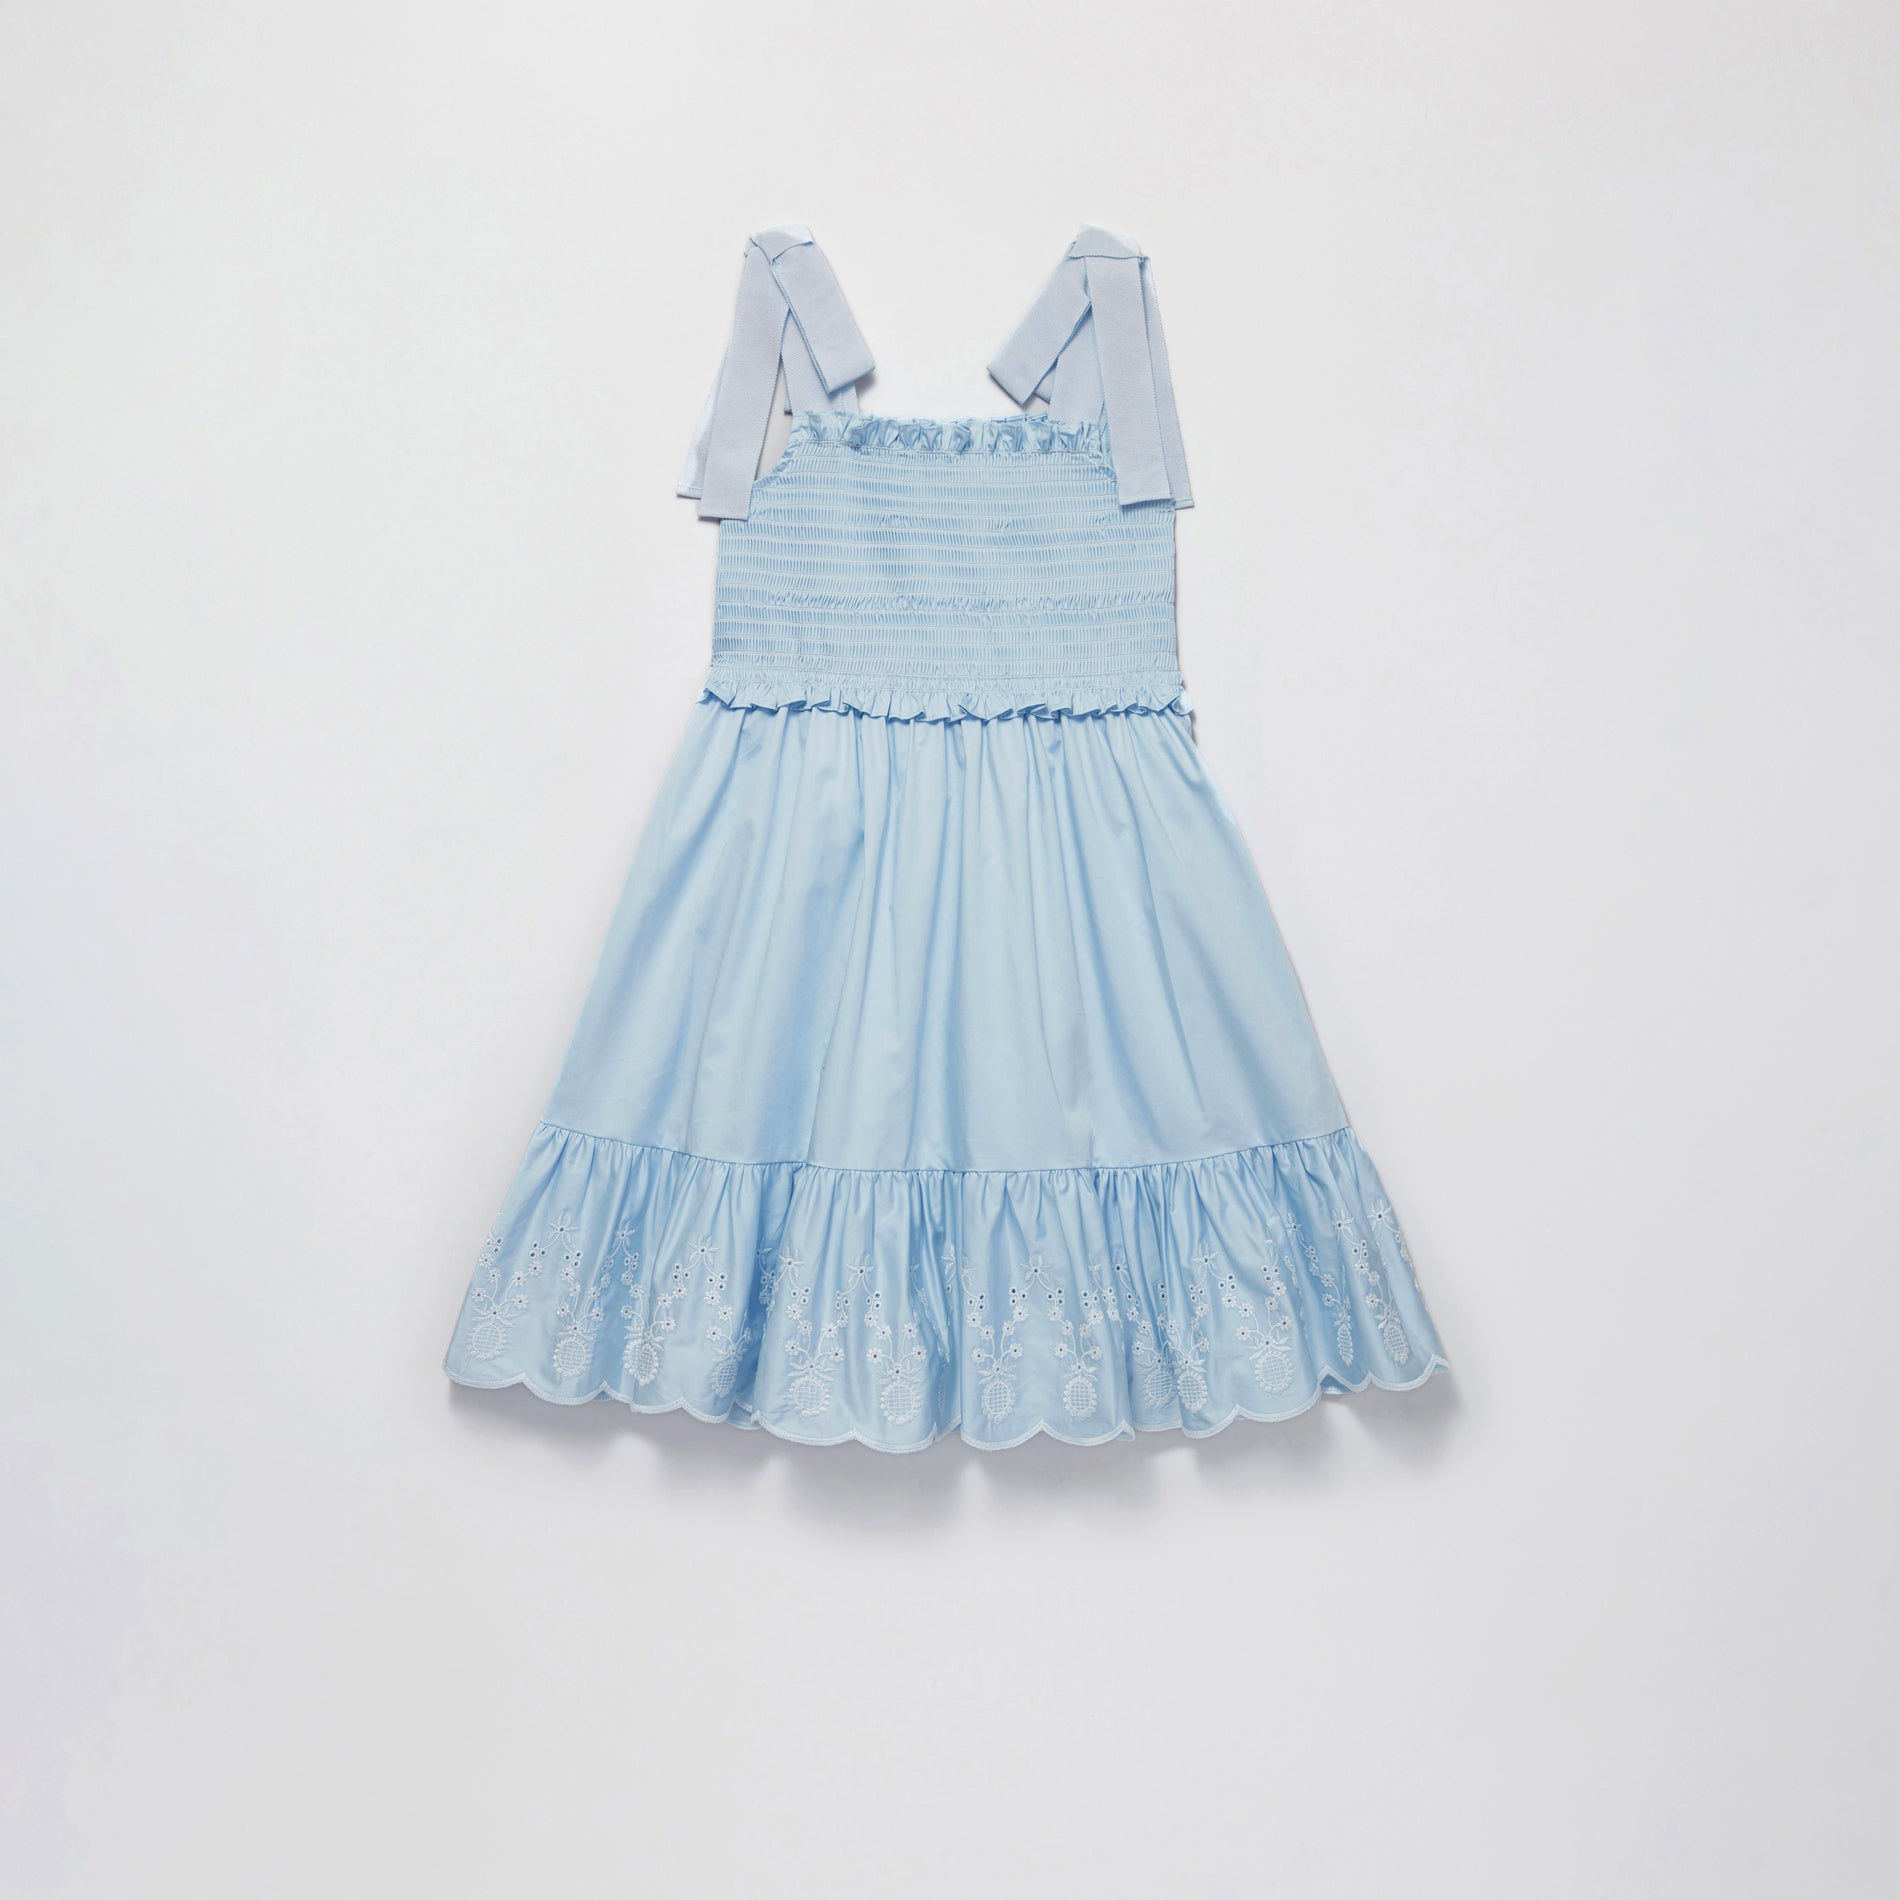 Blue Cotton Smocking Dress